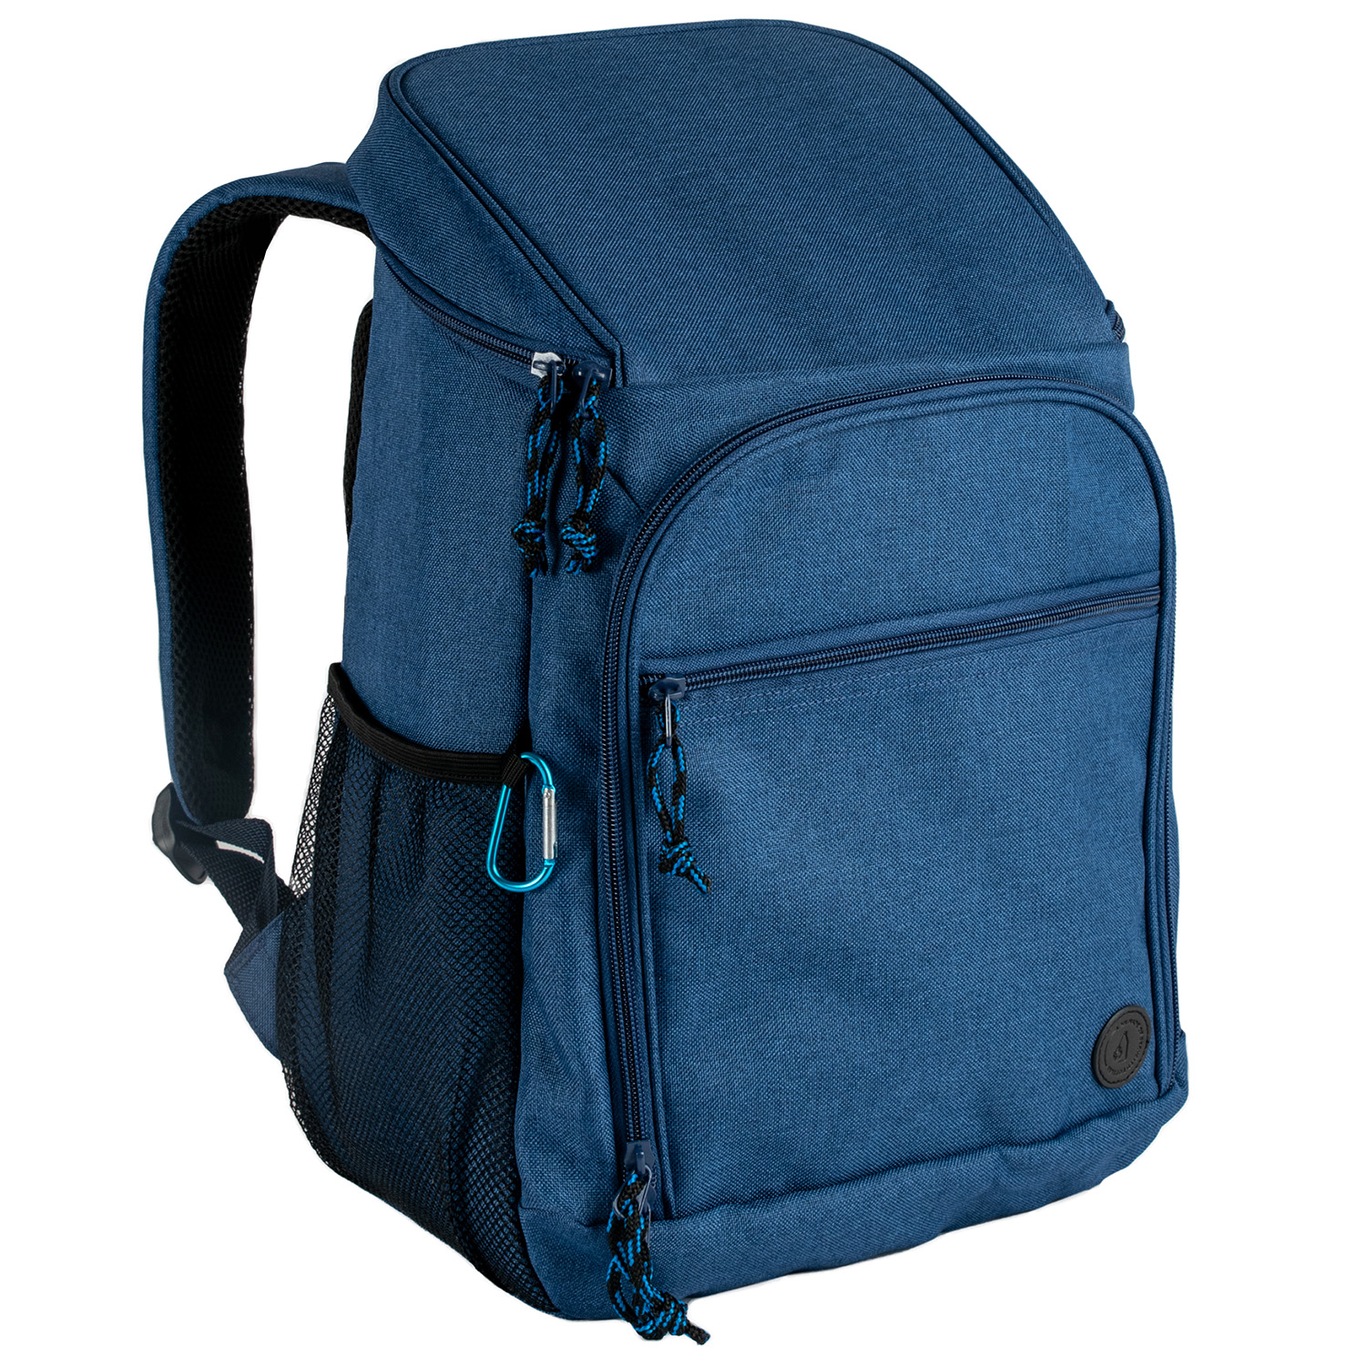 City Cooler Bag 21 L, Blue